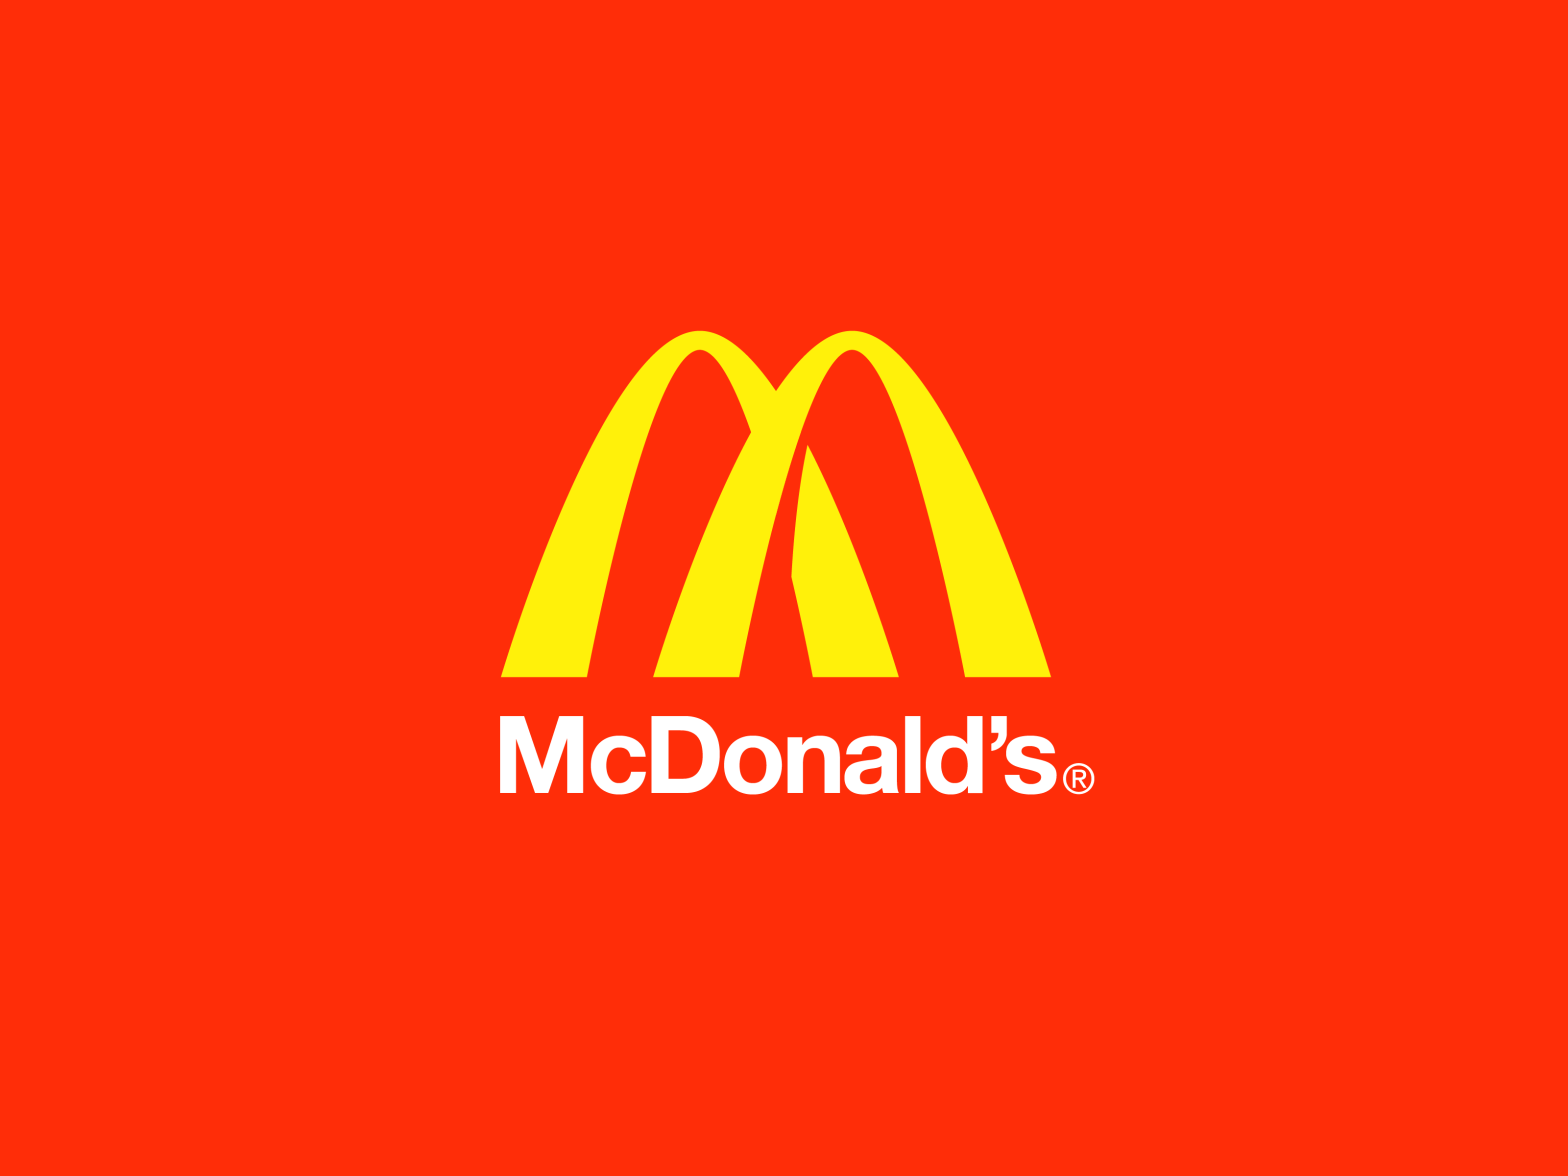 McDonalds Logo Redesign by Patrick Tuell - Brand Designer on Dribbble